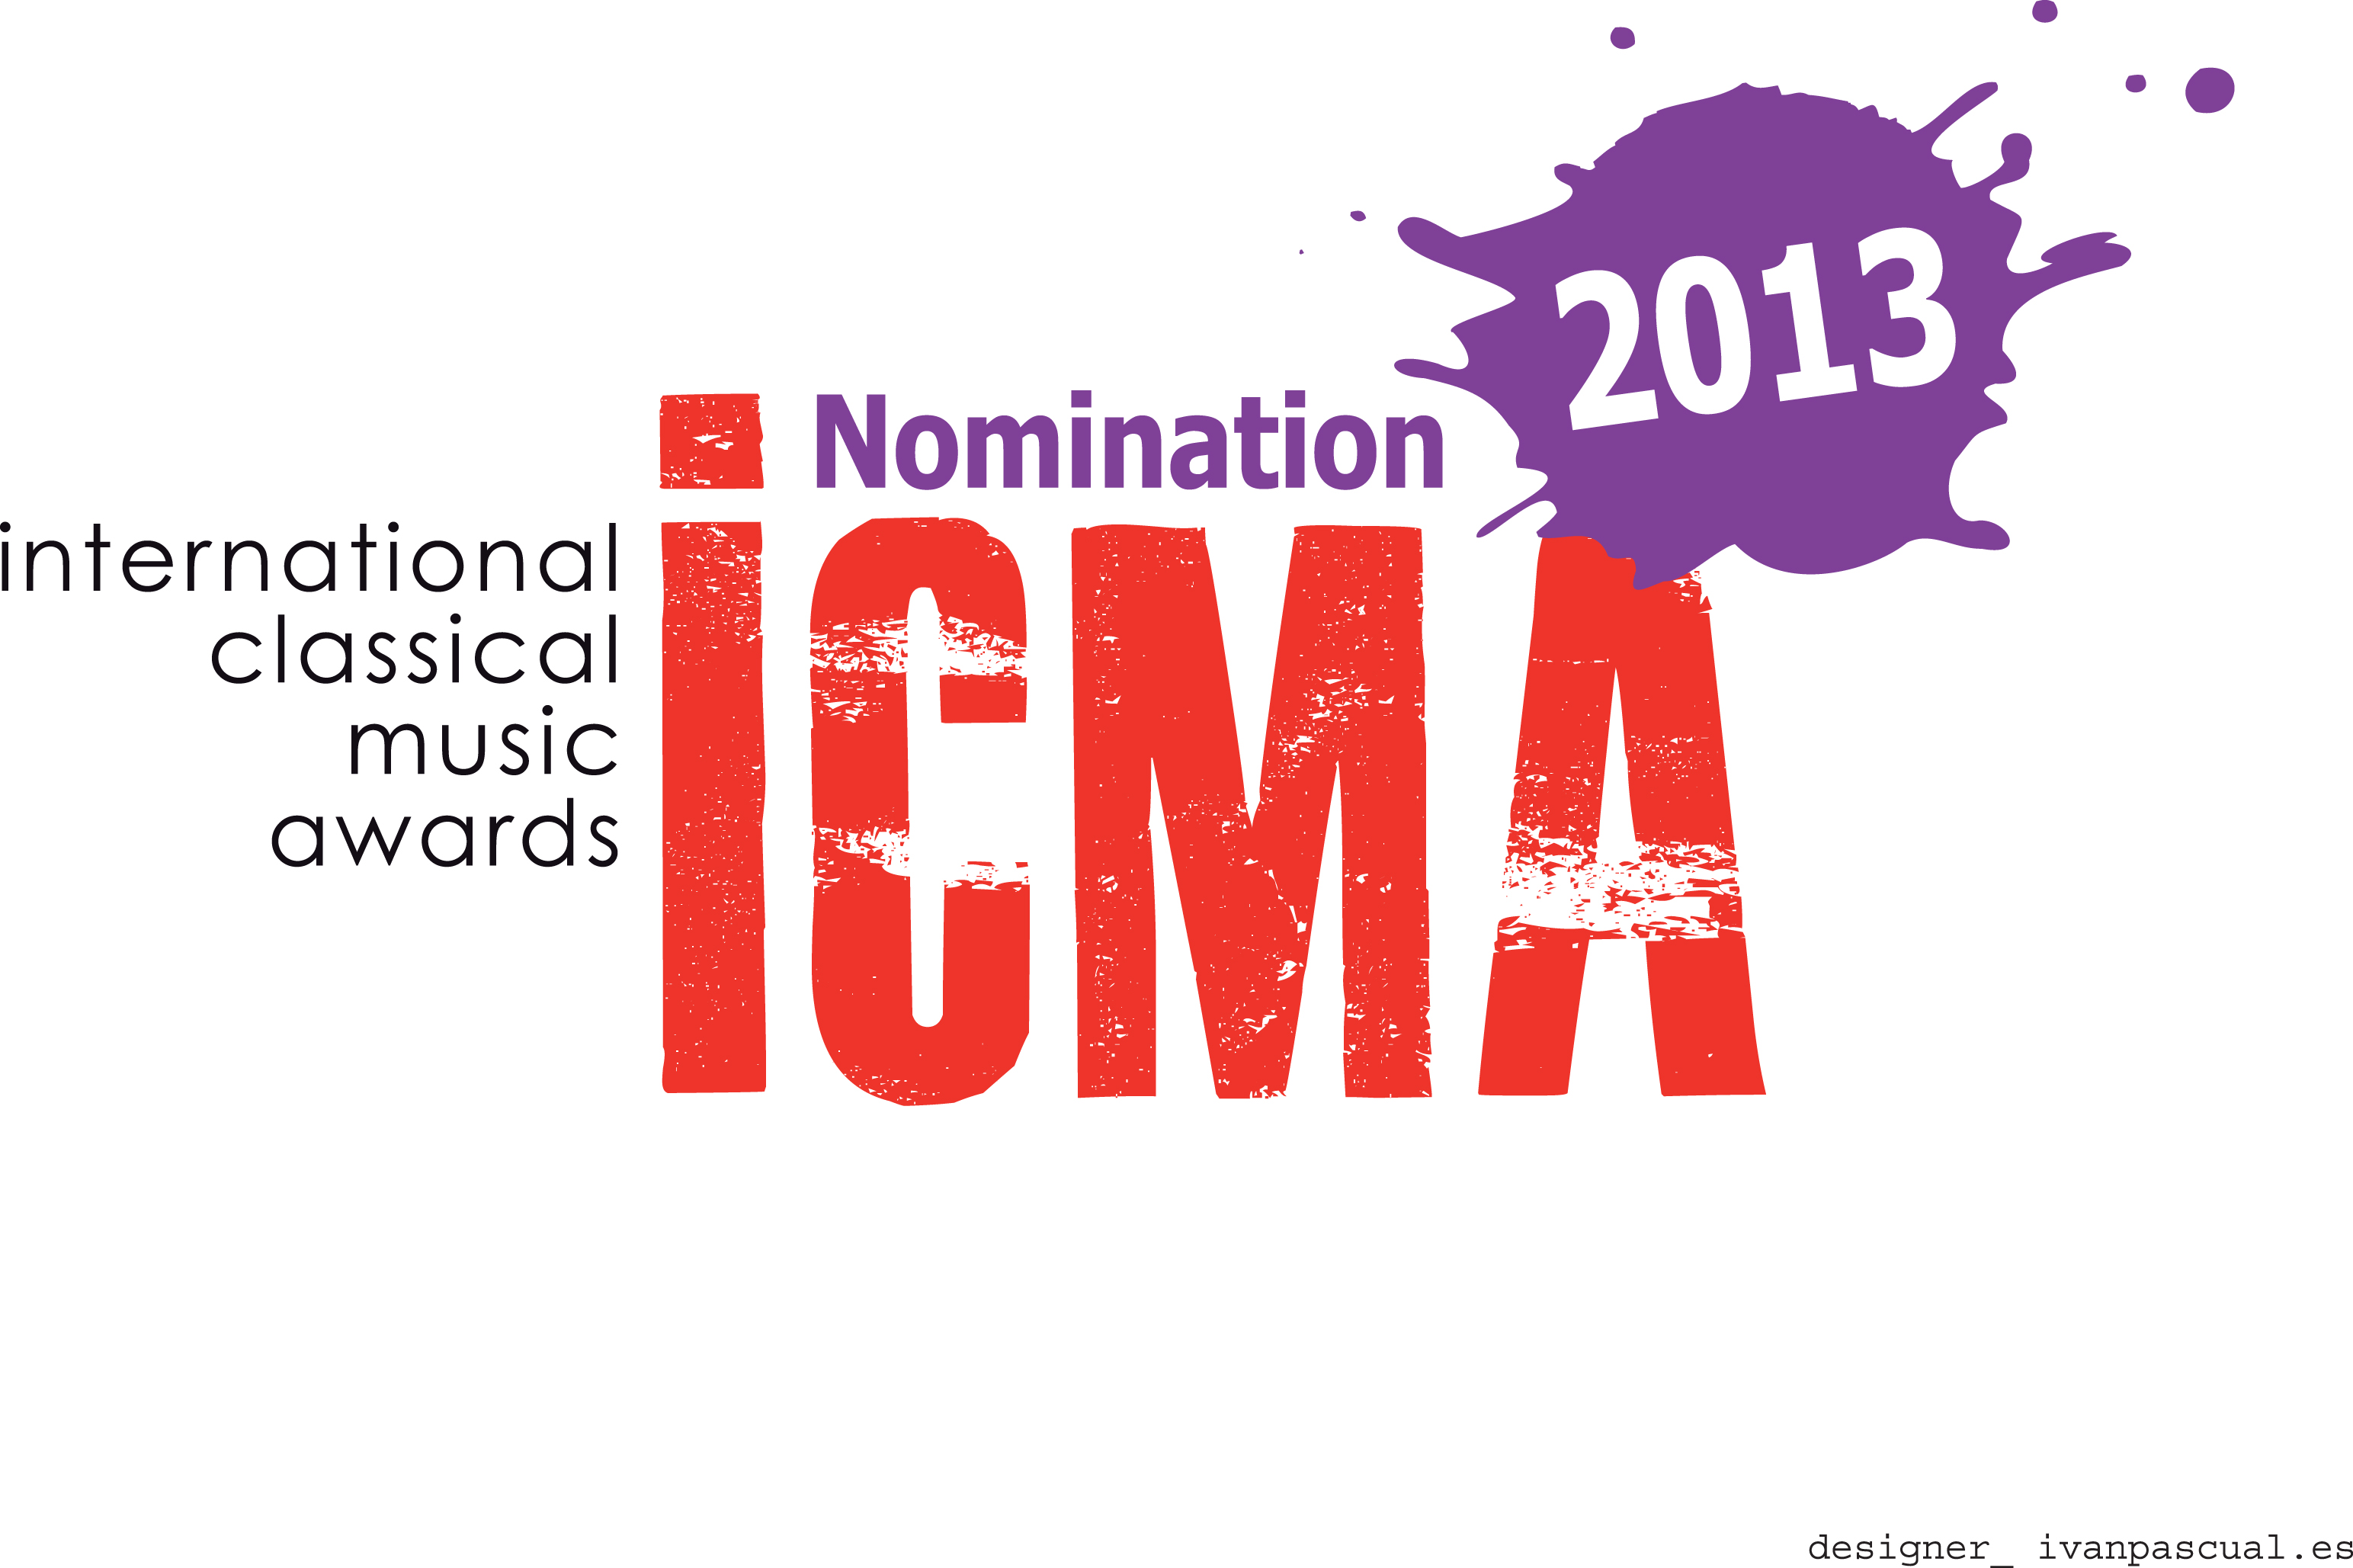 ICMA Nomination 2013